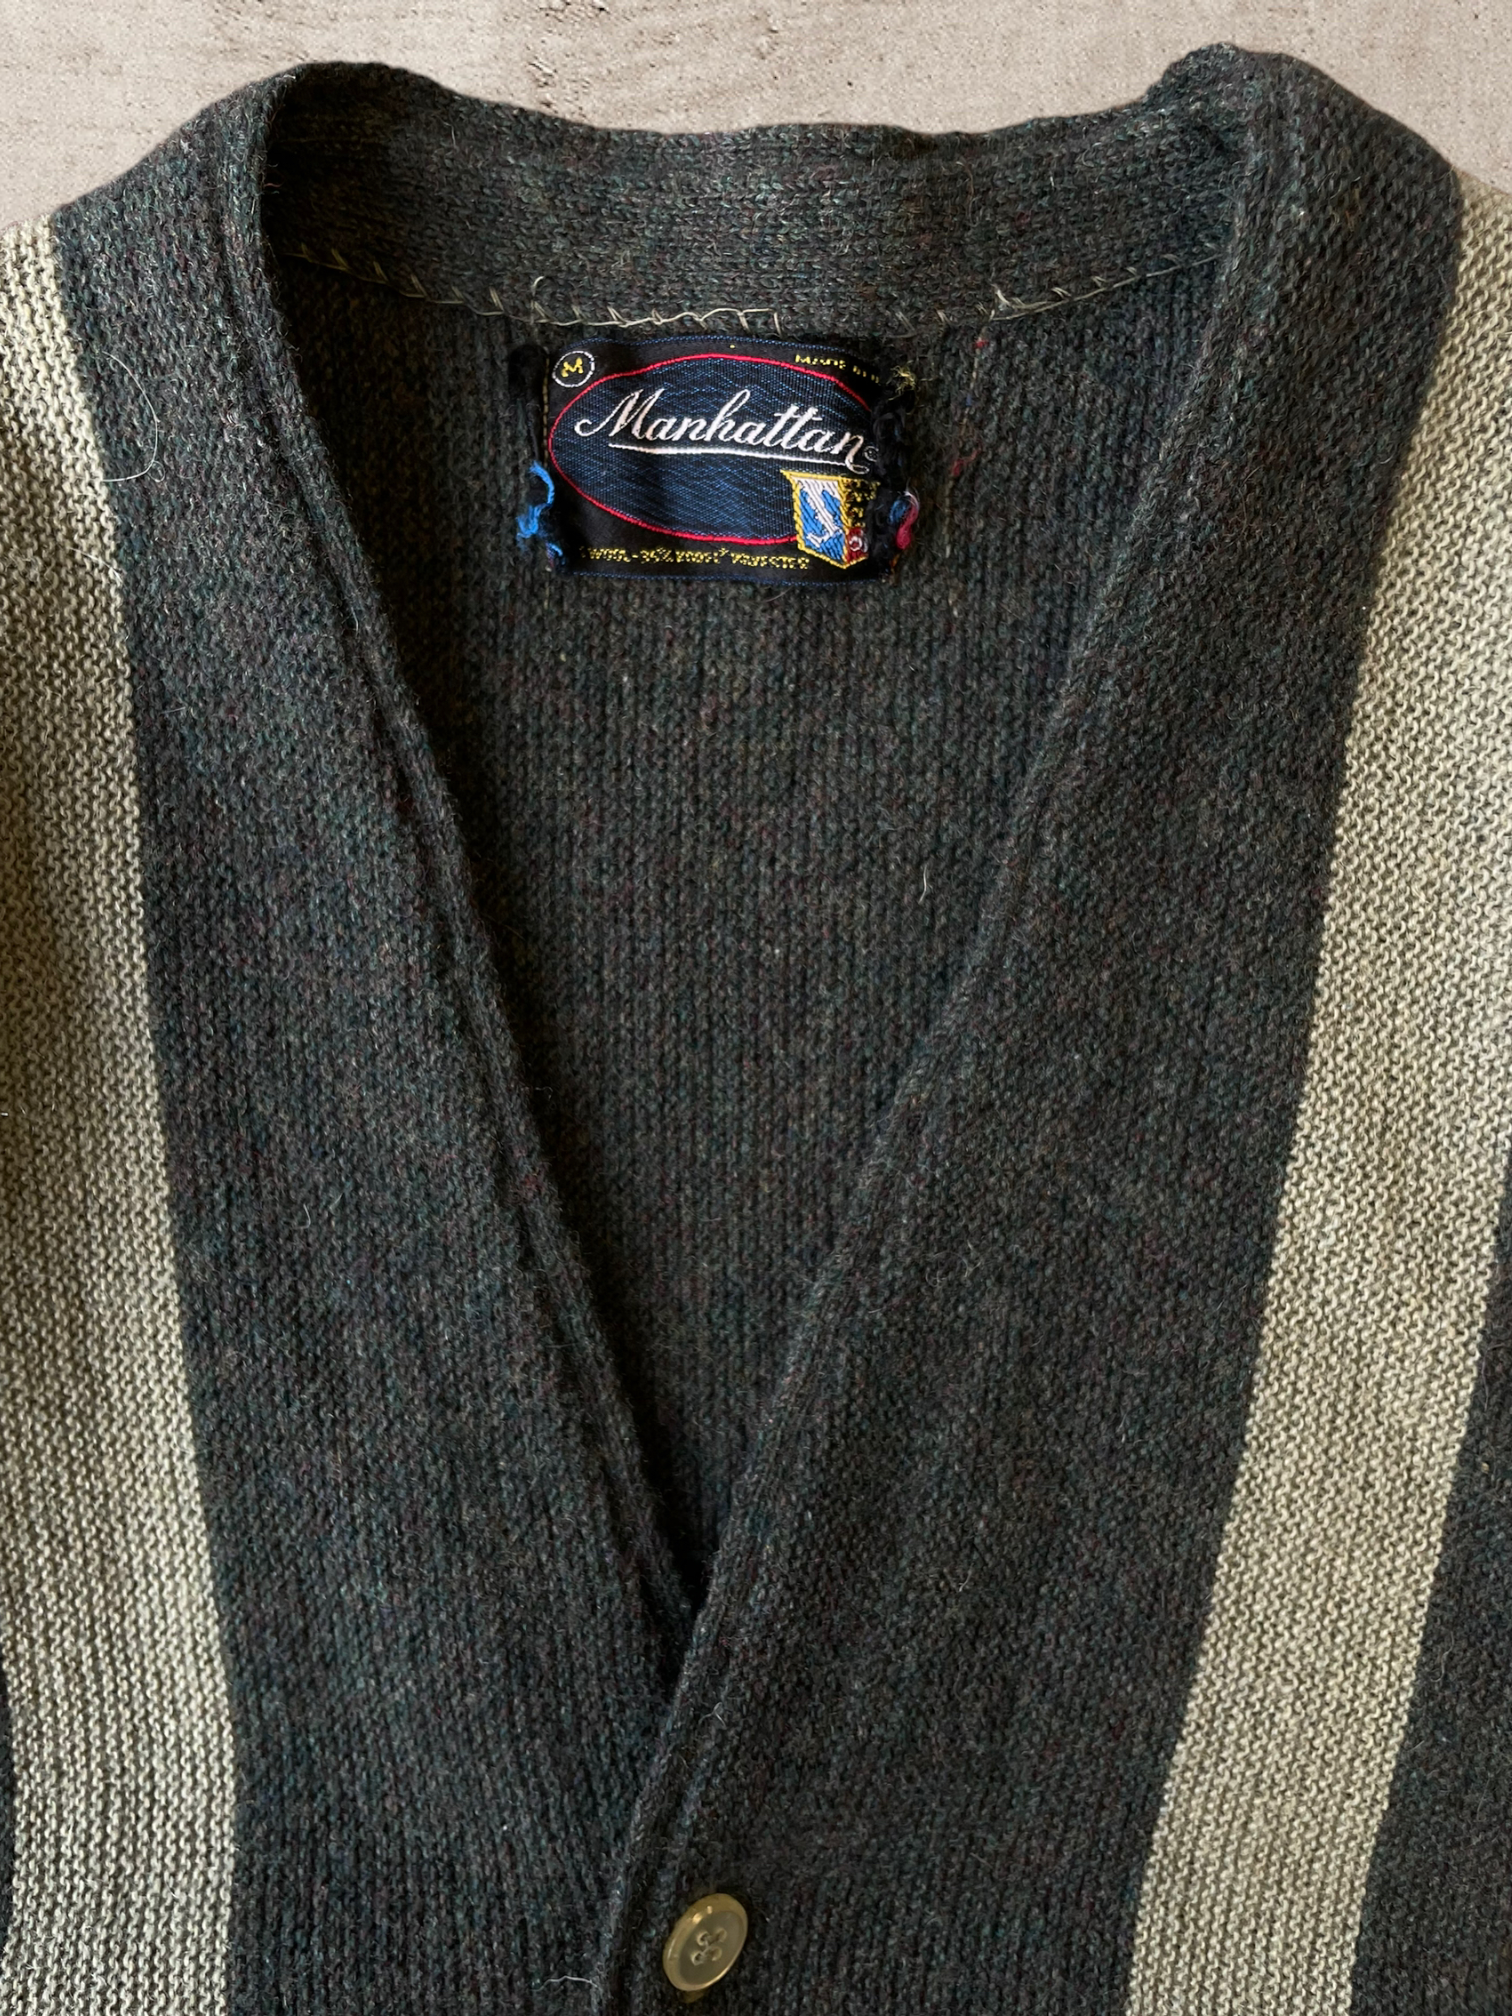 80s Stripped Knit Cardigan - Medium